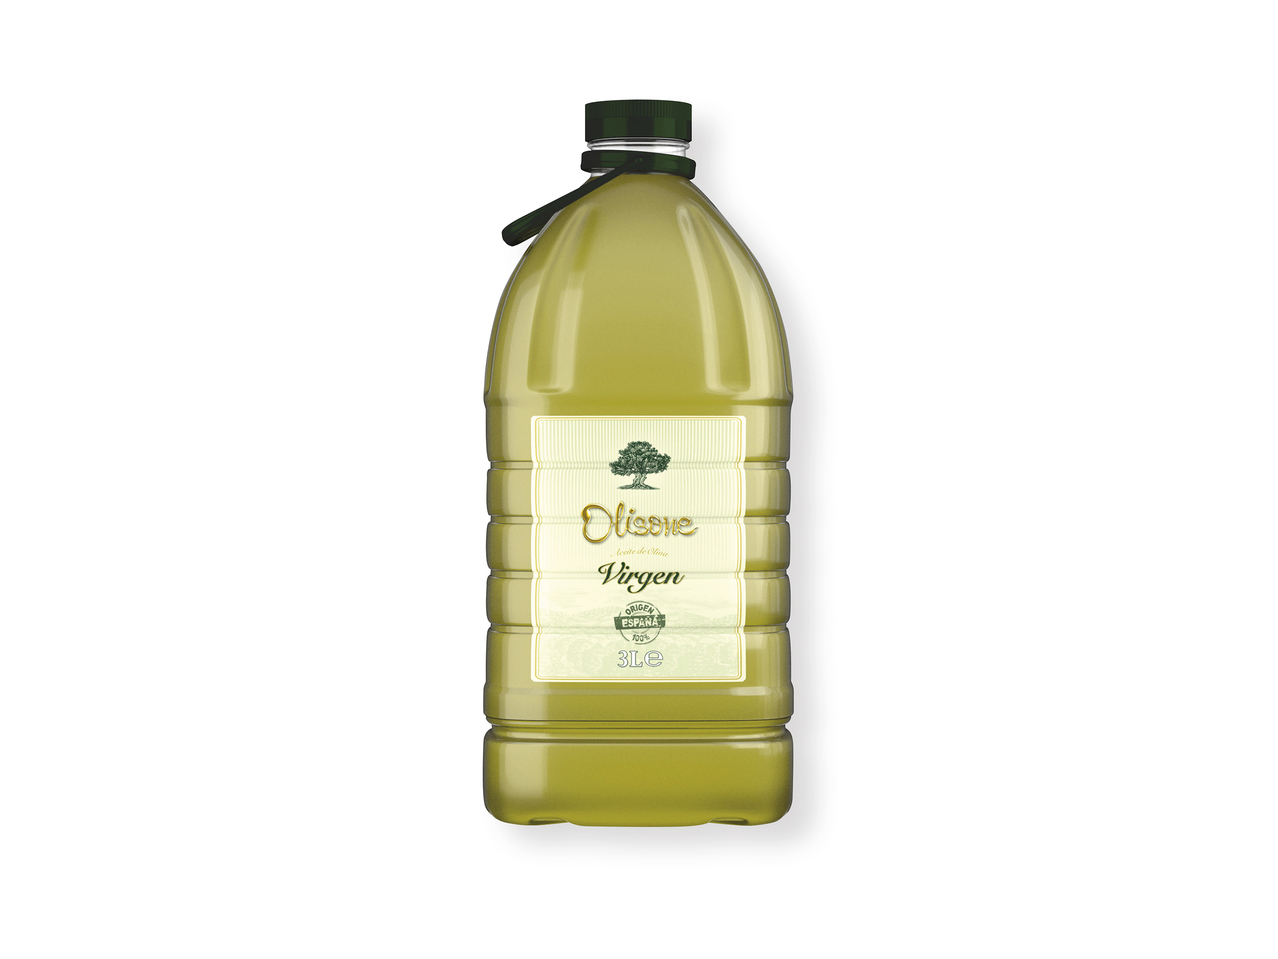 "Olisone" Aceite de oliva virgen